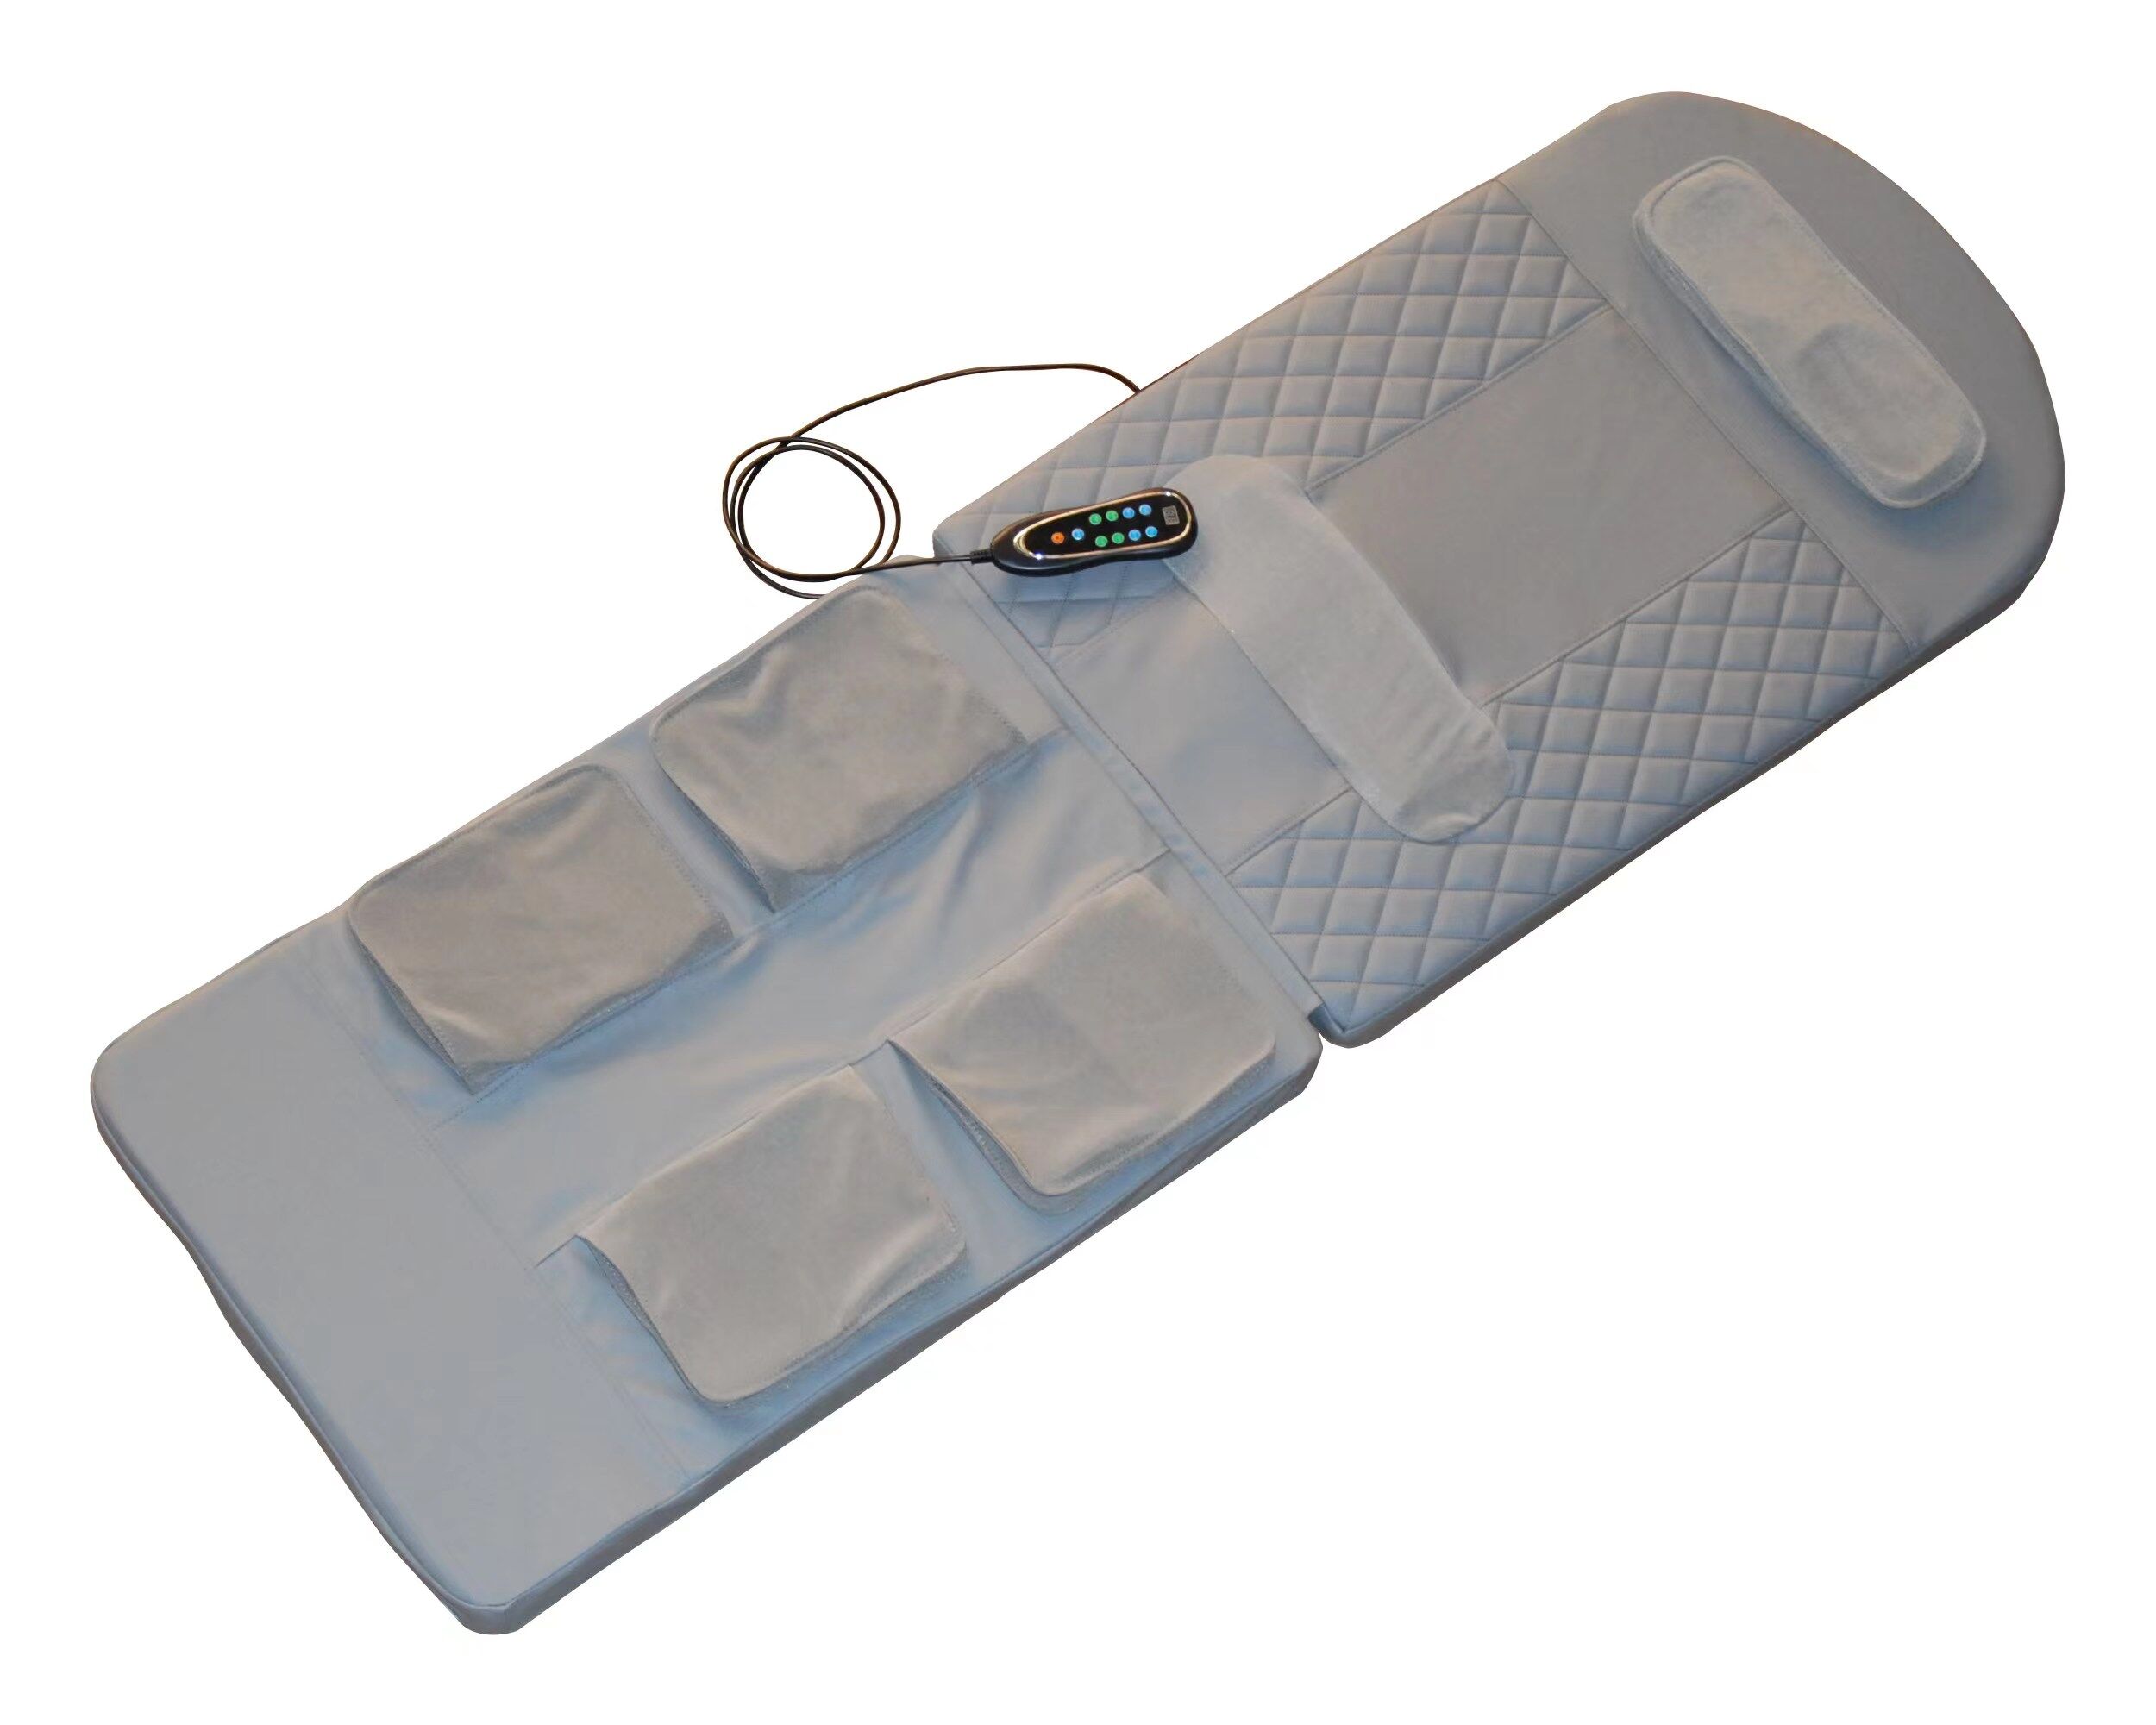 Foldable Full Body Massage Mat with 10 Vibration Motors